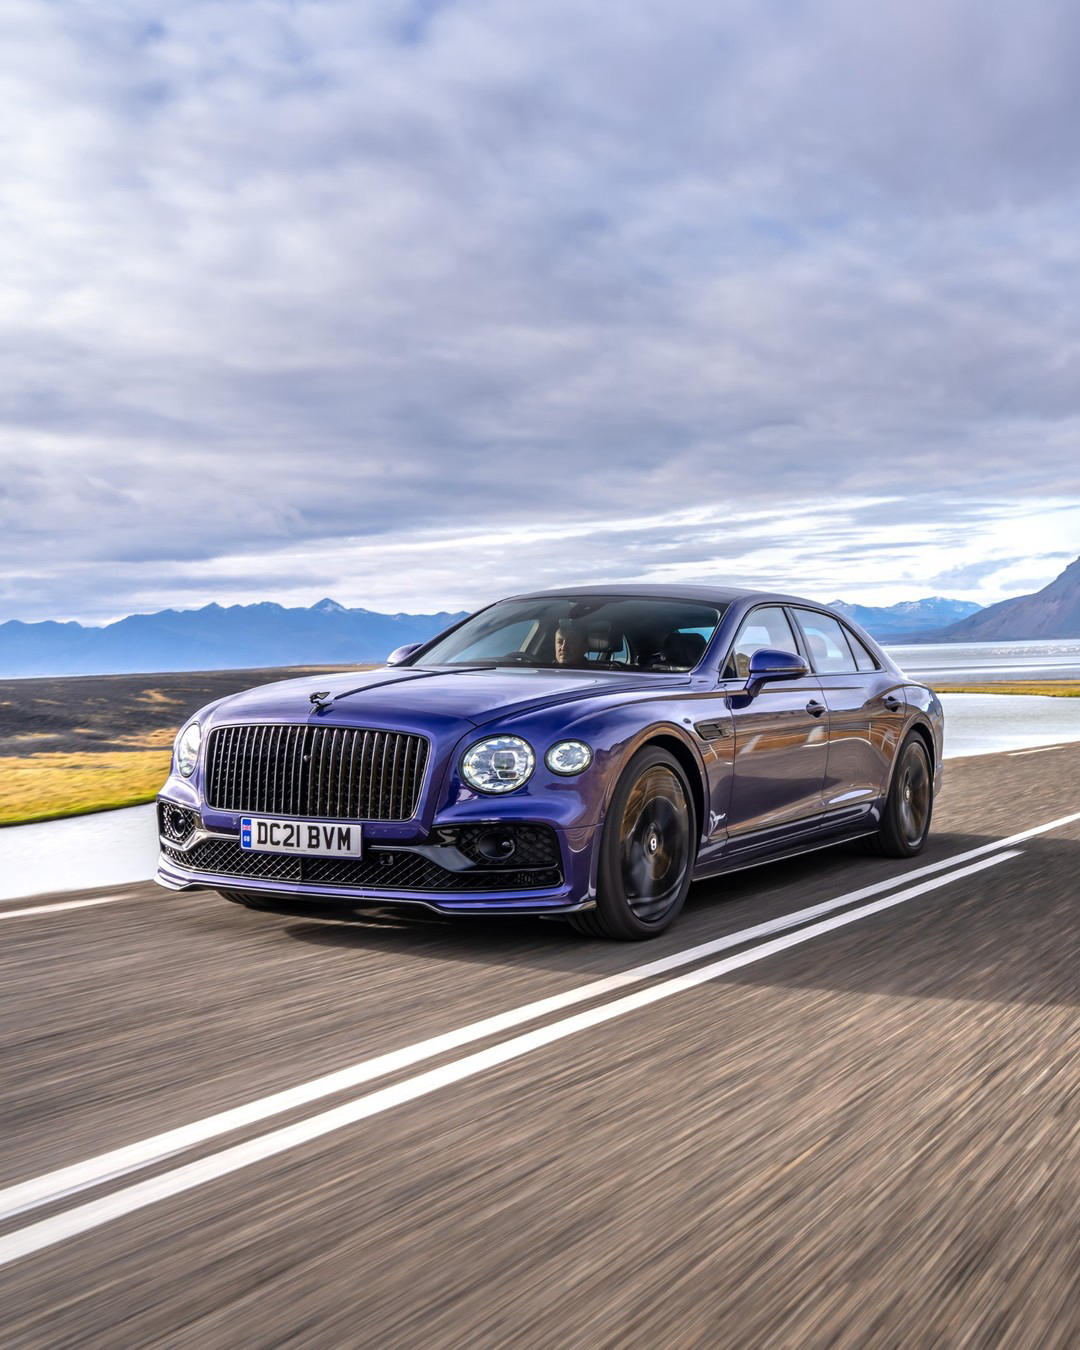 Bentley Motors - Never look back unless this is your rearview